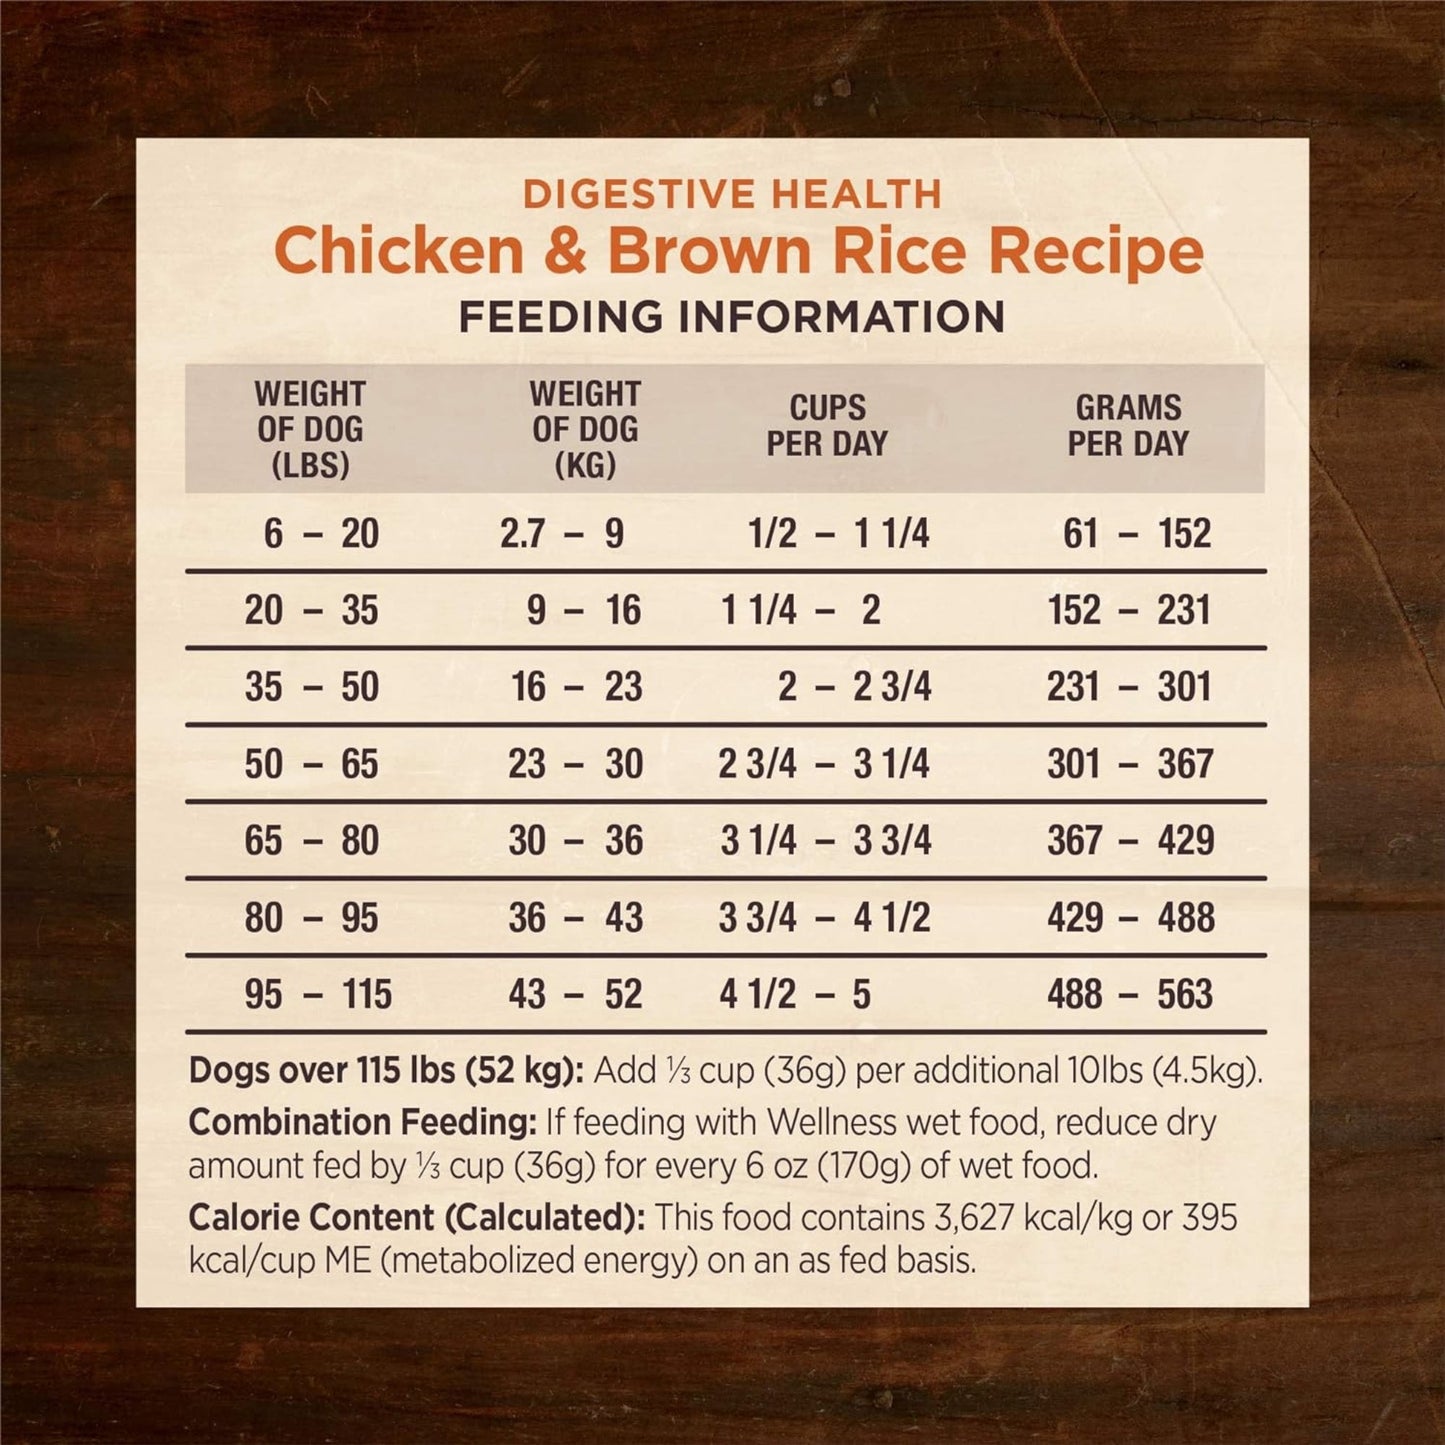 Wellness Dog Core Digestive Health Chicken Recipe 24Lb